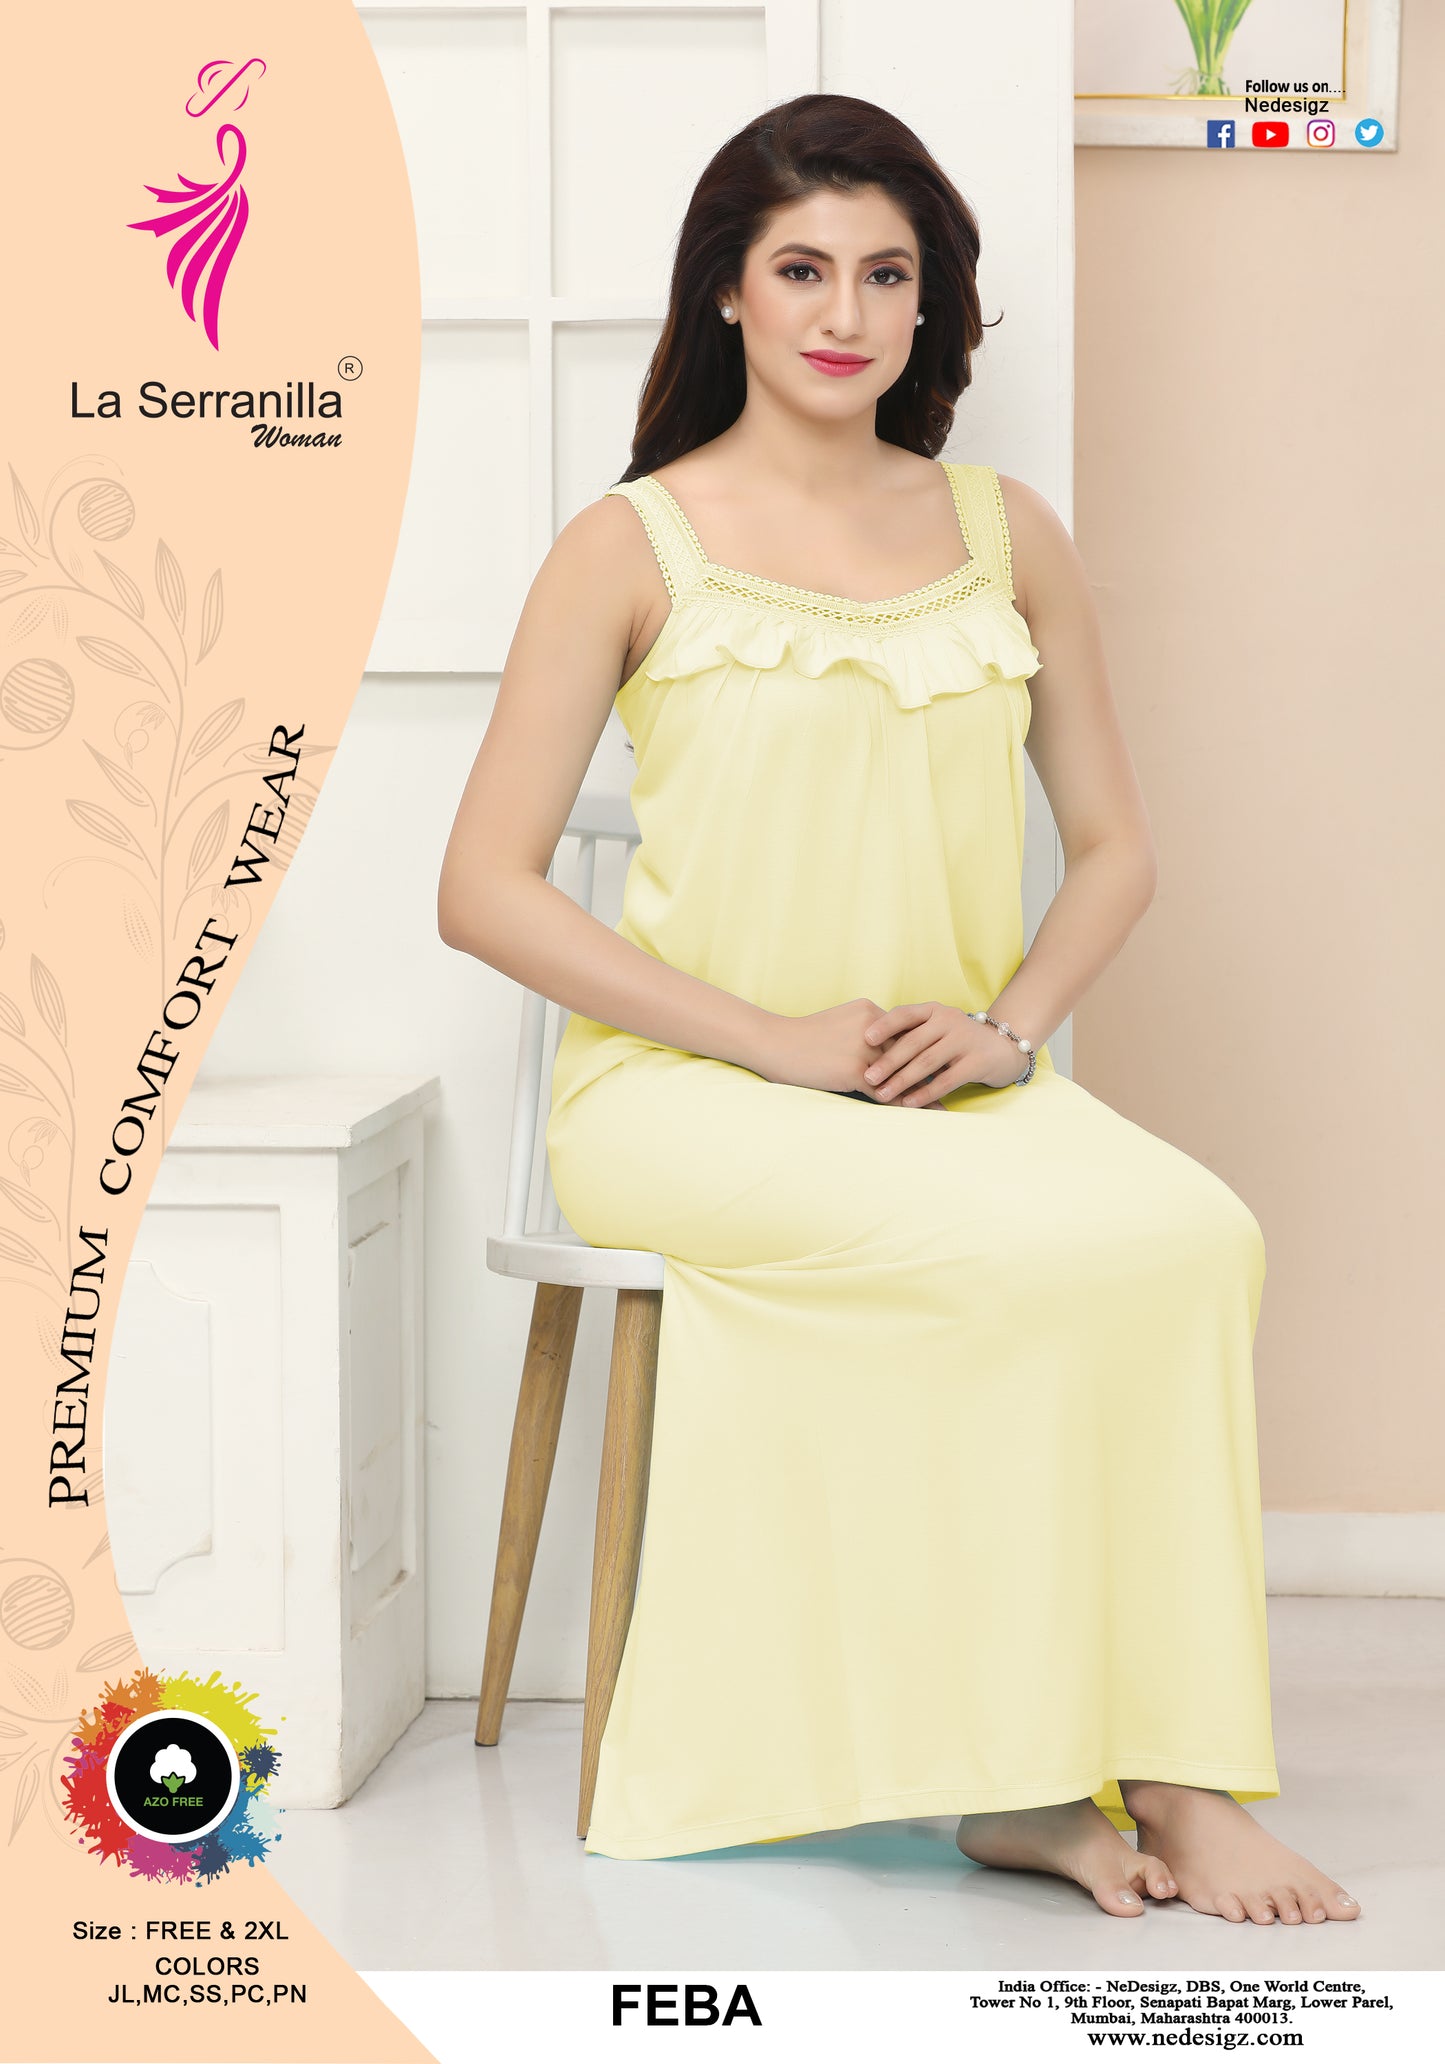 La Serranilla Women's Azo Free Cotton Hosiery Nighty-NeDesigz.com